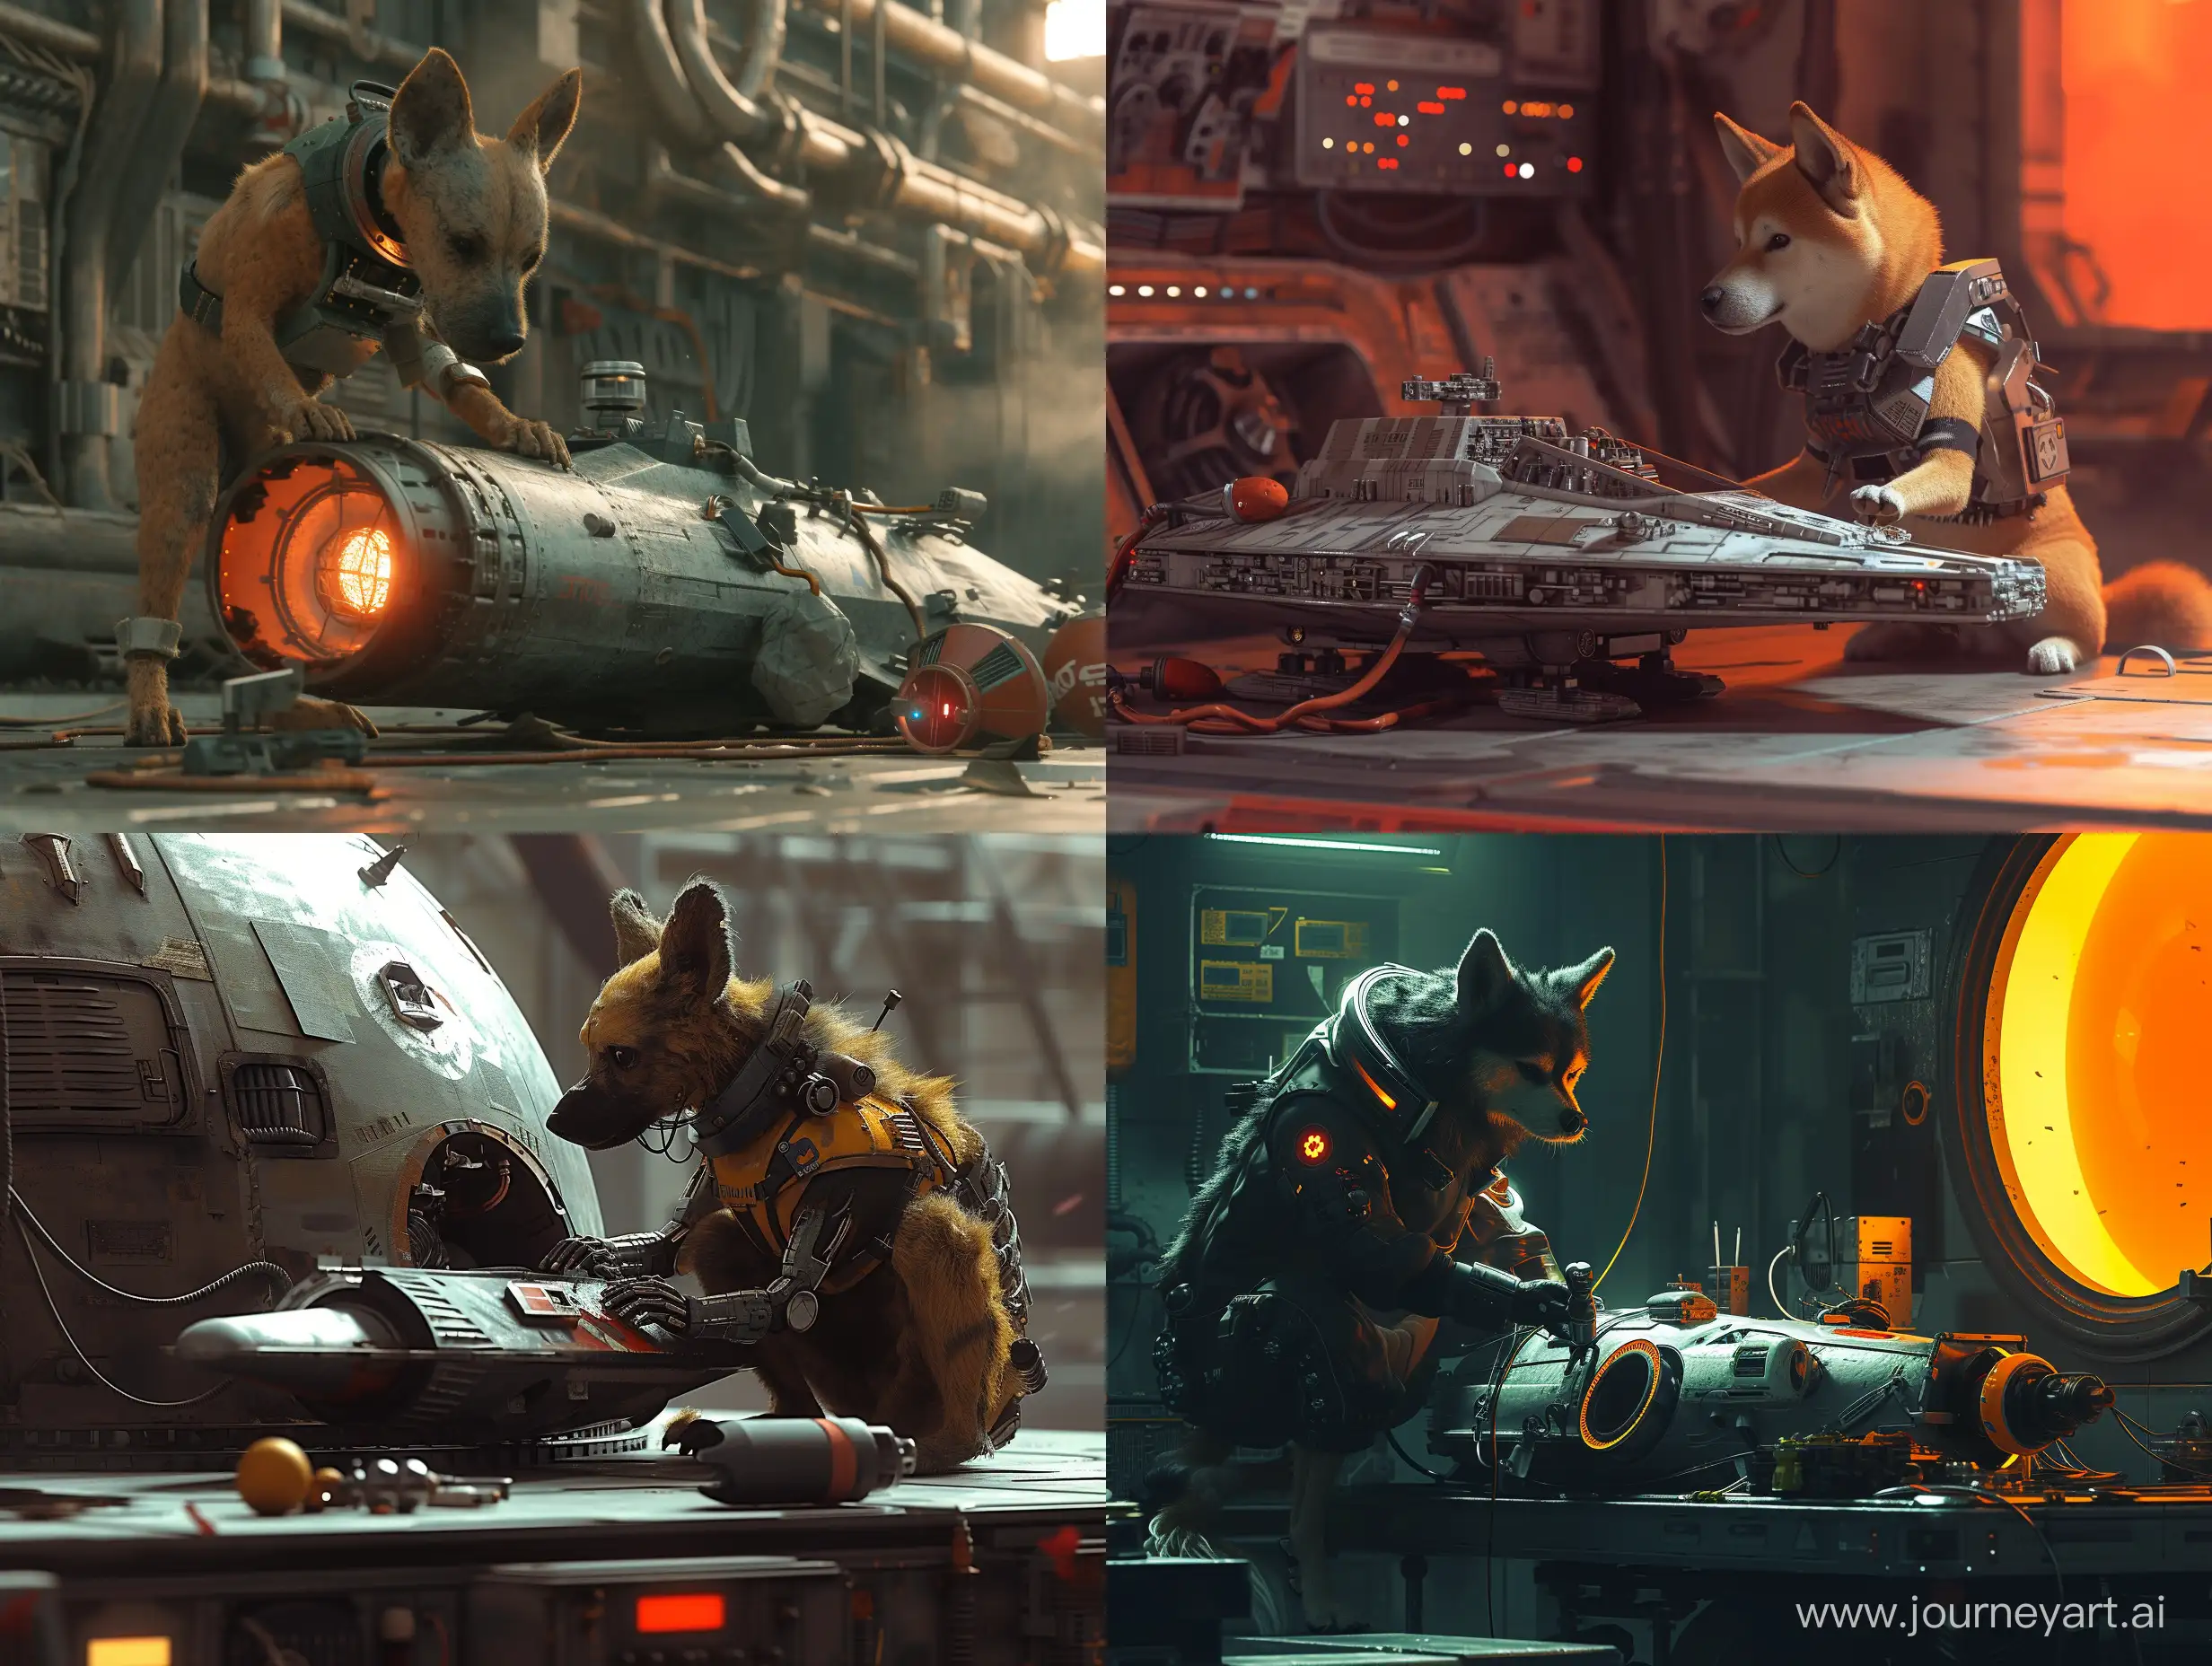 Cyberpunk-Humanoid-Dog-Repairs-Spaceship-on-Death-Star-Station